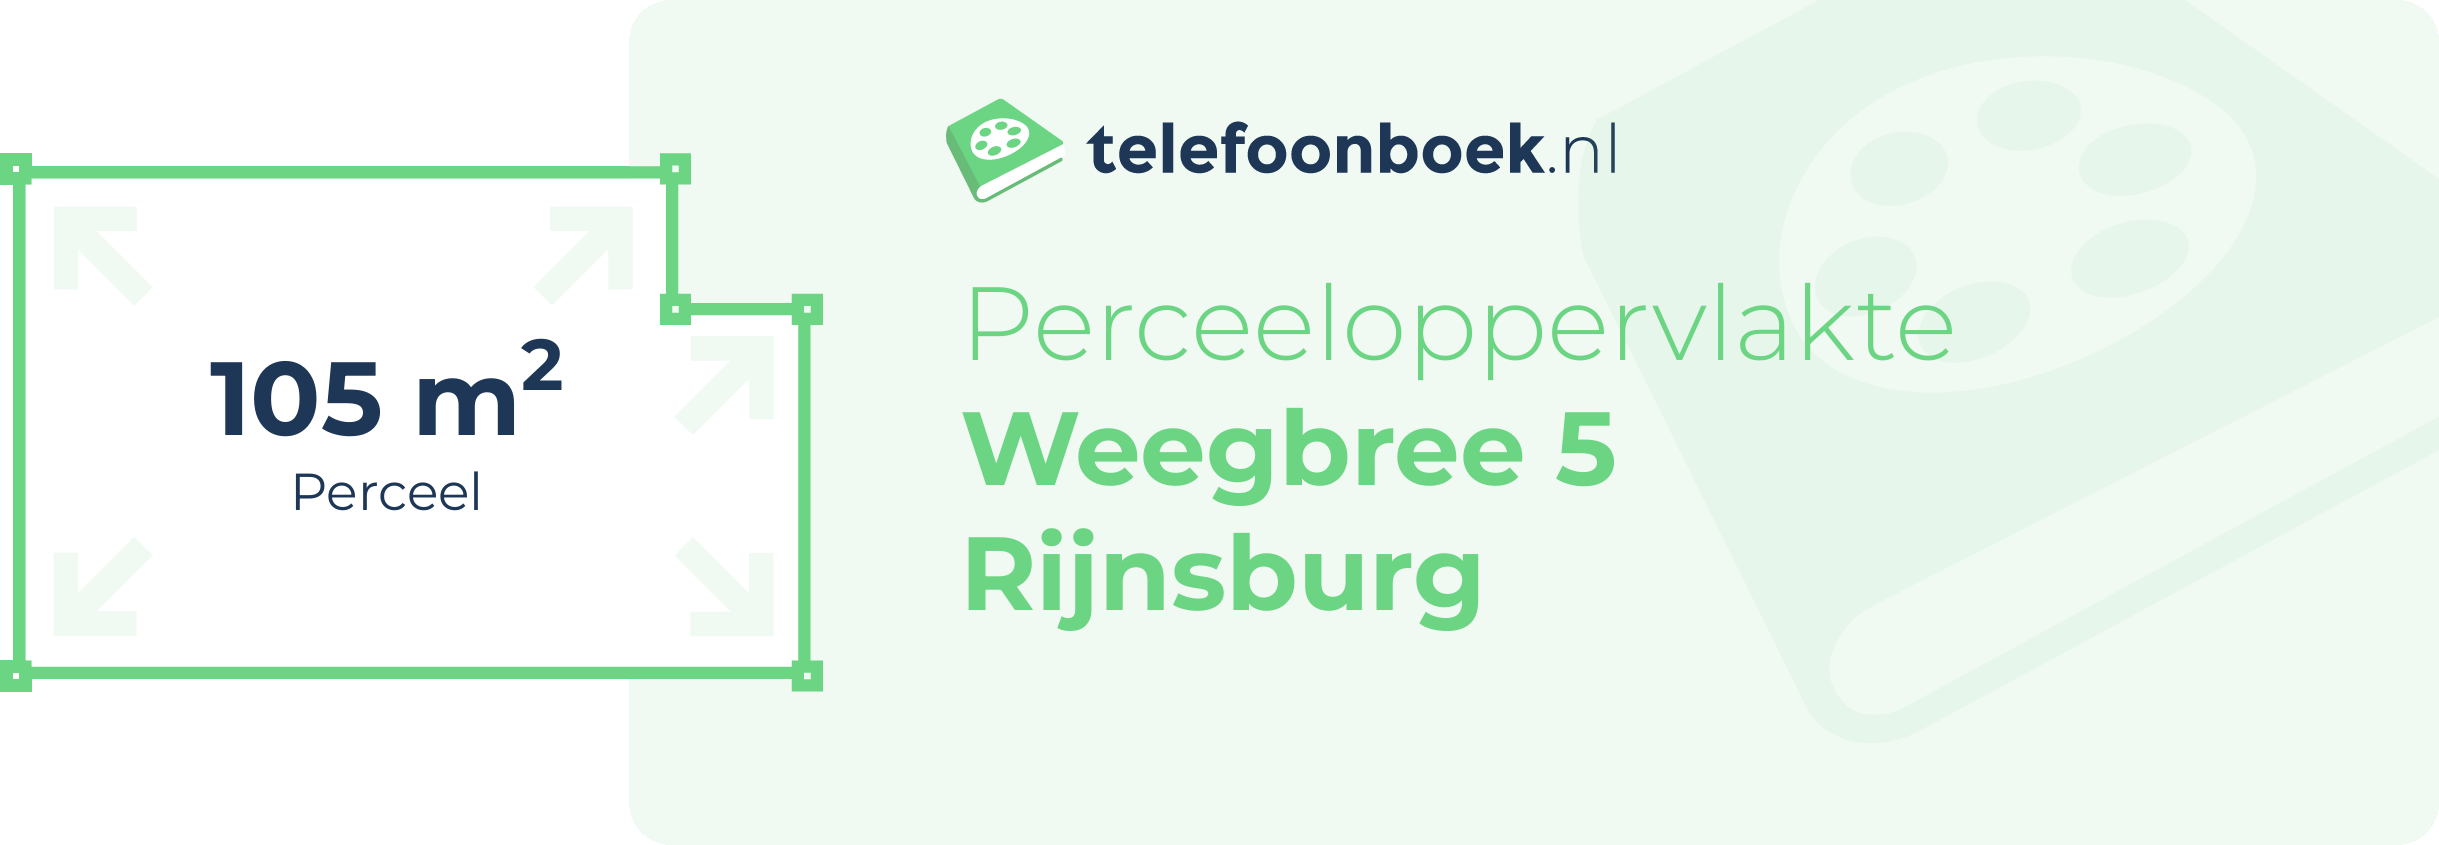 Perceeloppervlakte Weegbree 5 Rijnsburg